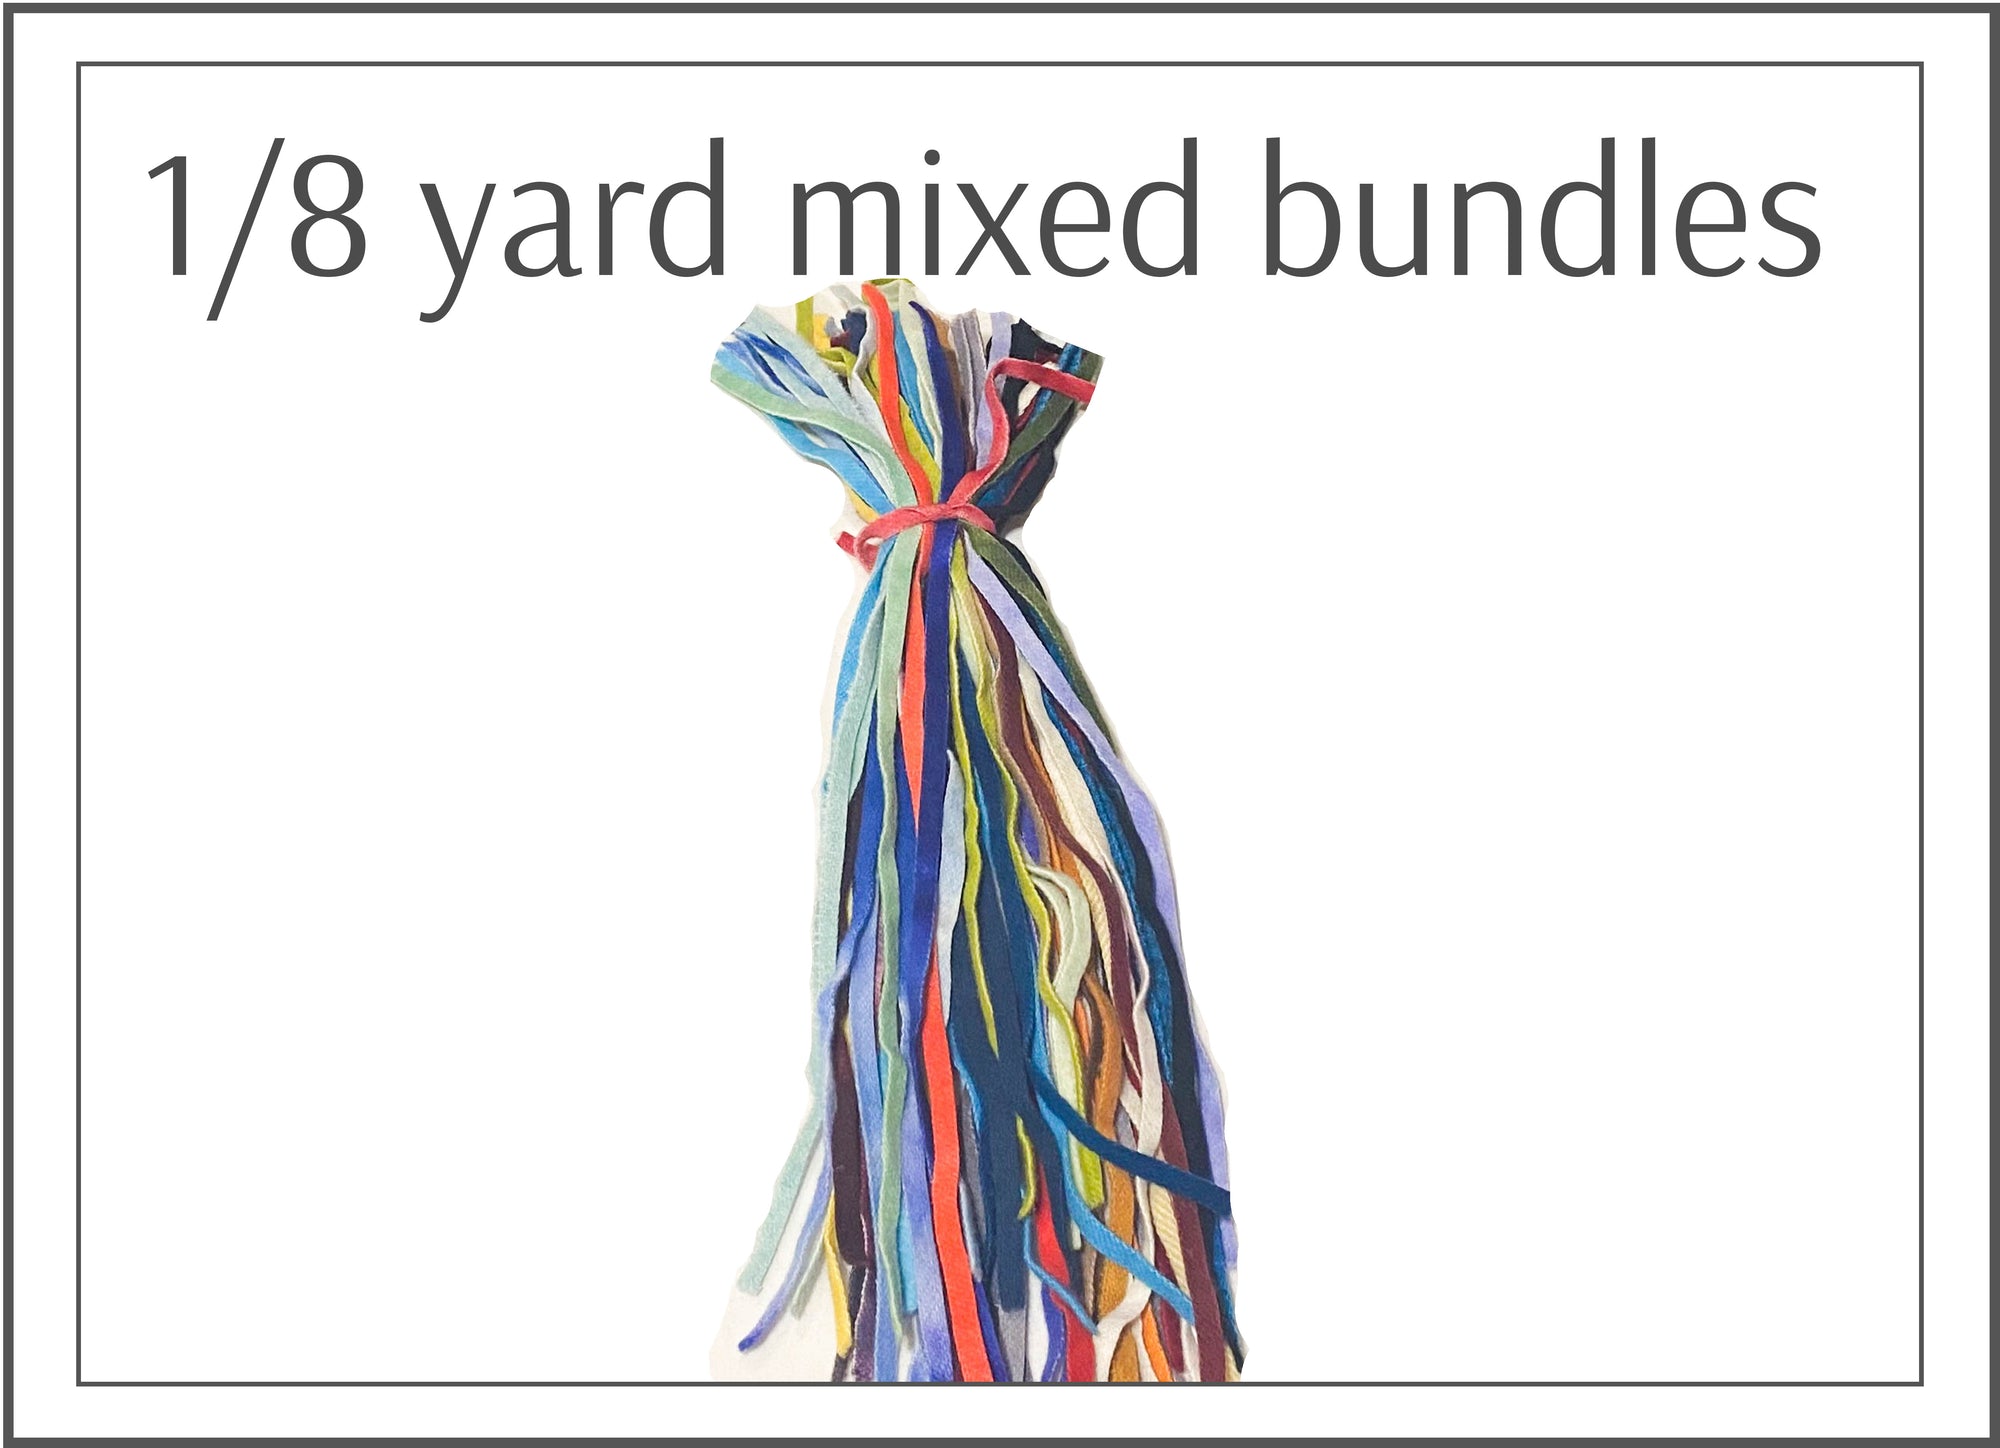 Mixed Bundle - 1/8 yard - SALE